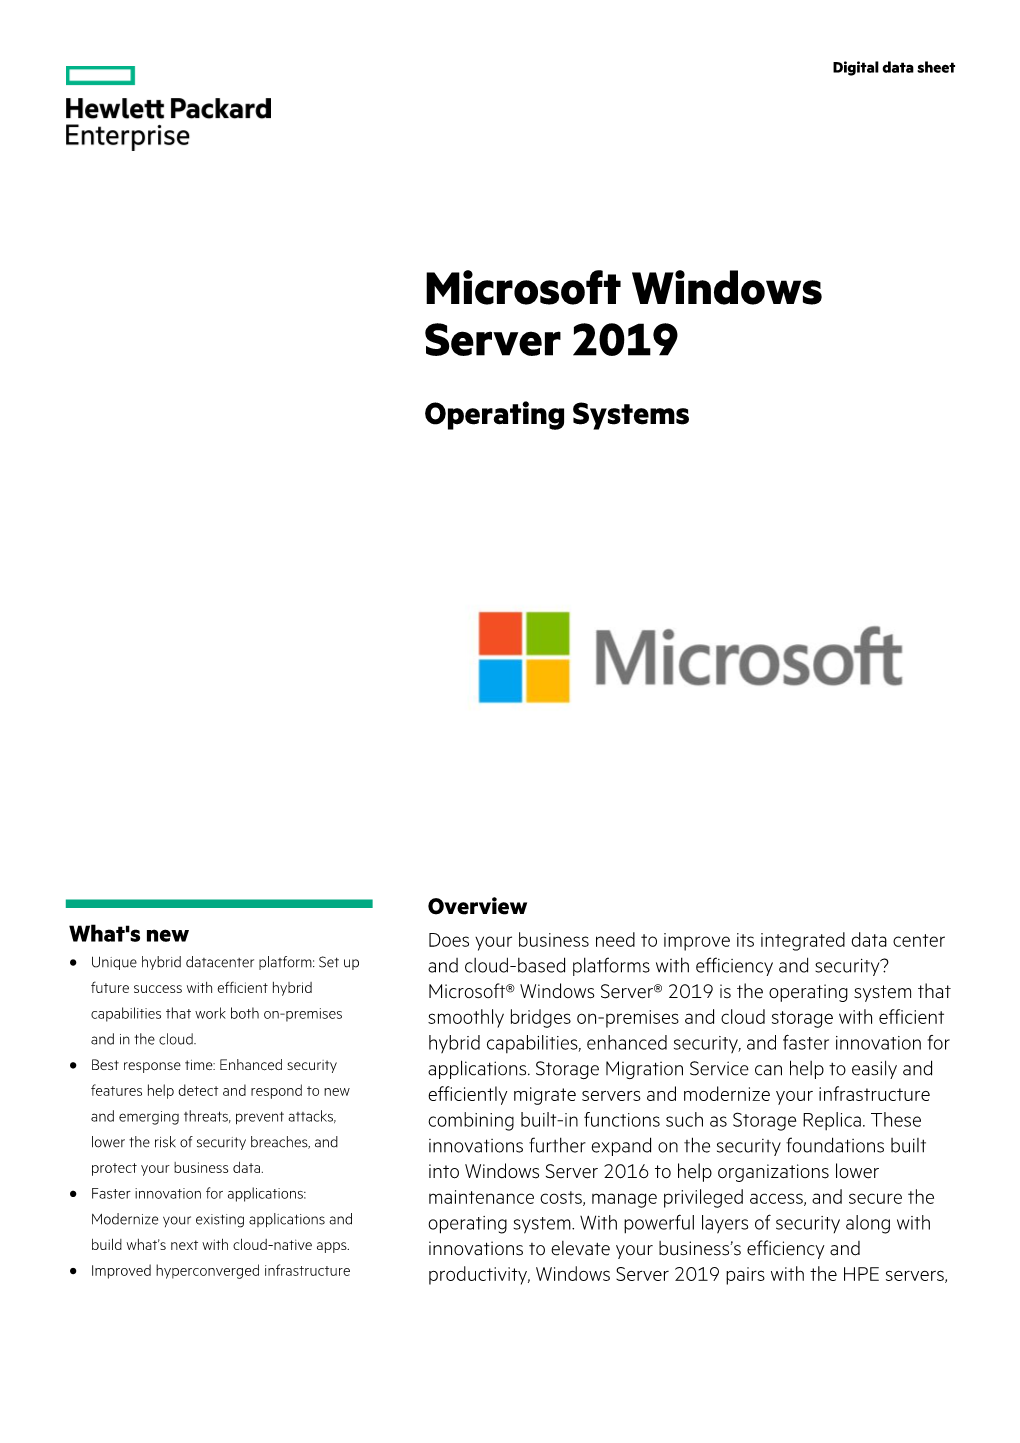 Microsoft Windows Server 2019 Digital Data Sheet